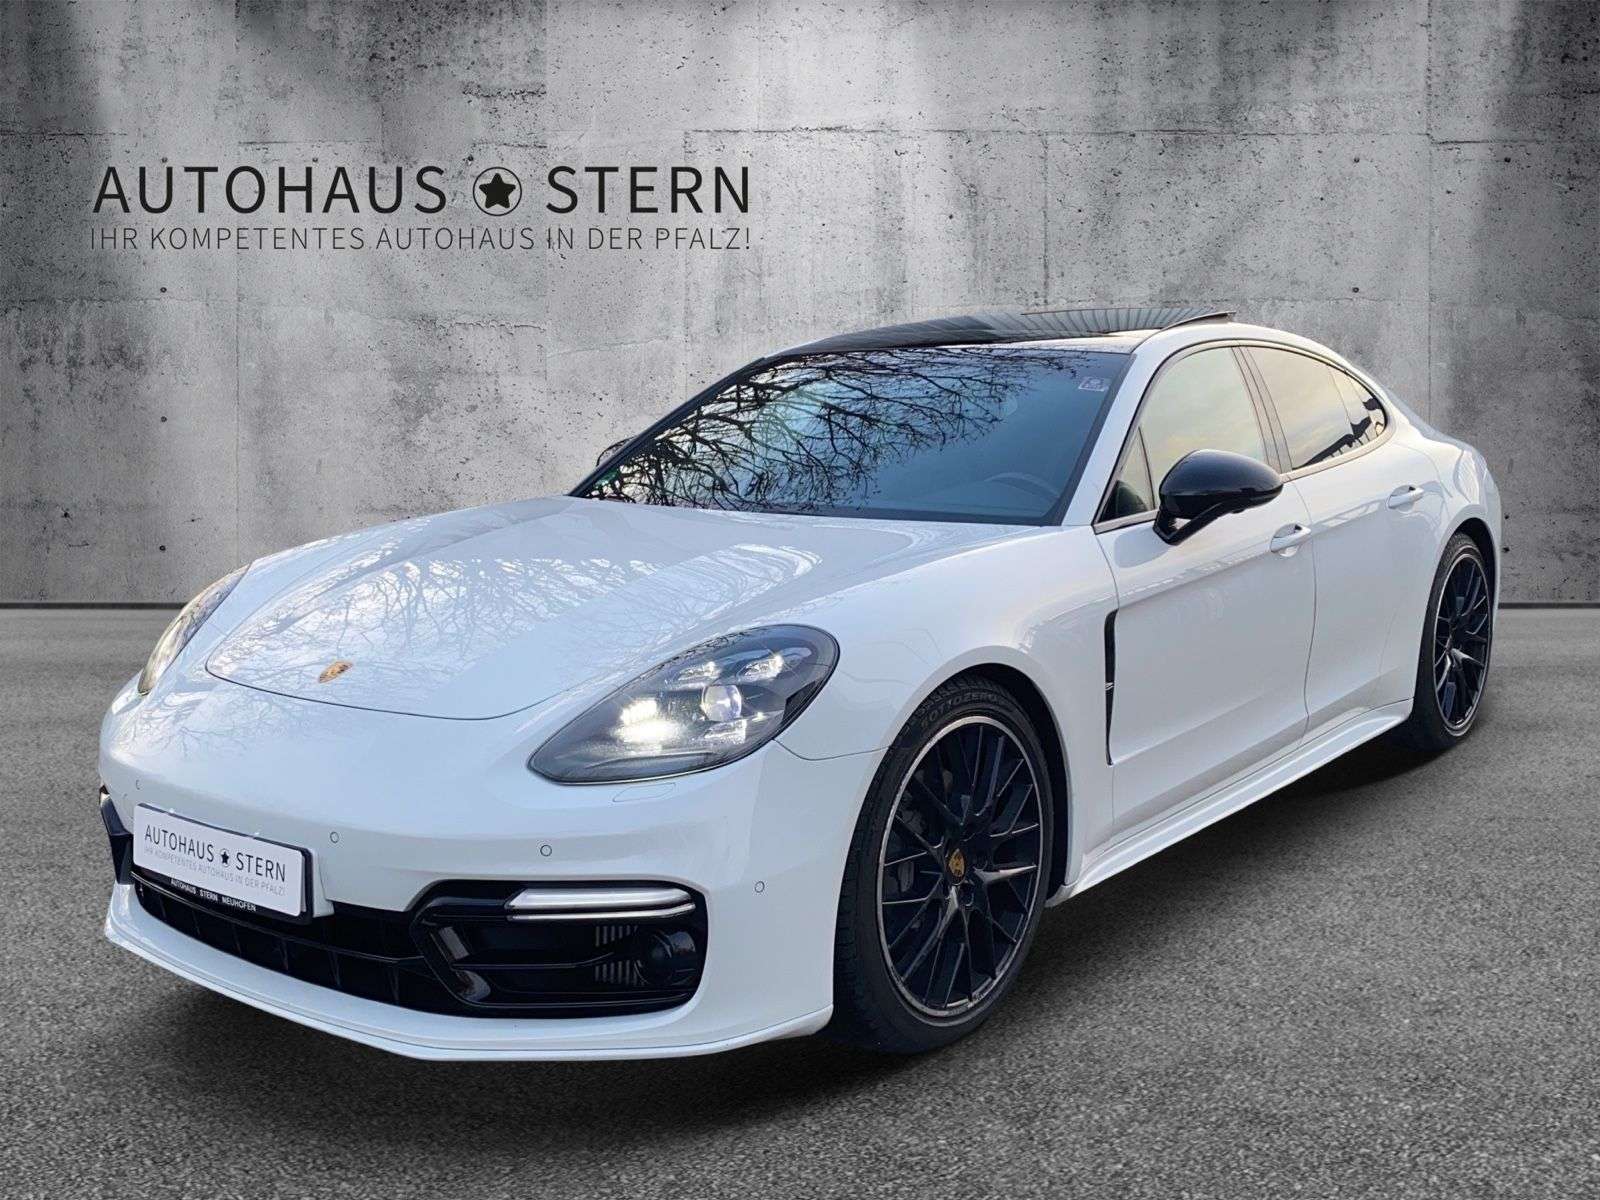 Porsche Panamera Sedan in White used in Neuhofen for € 89,900.-